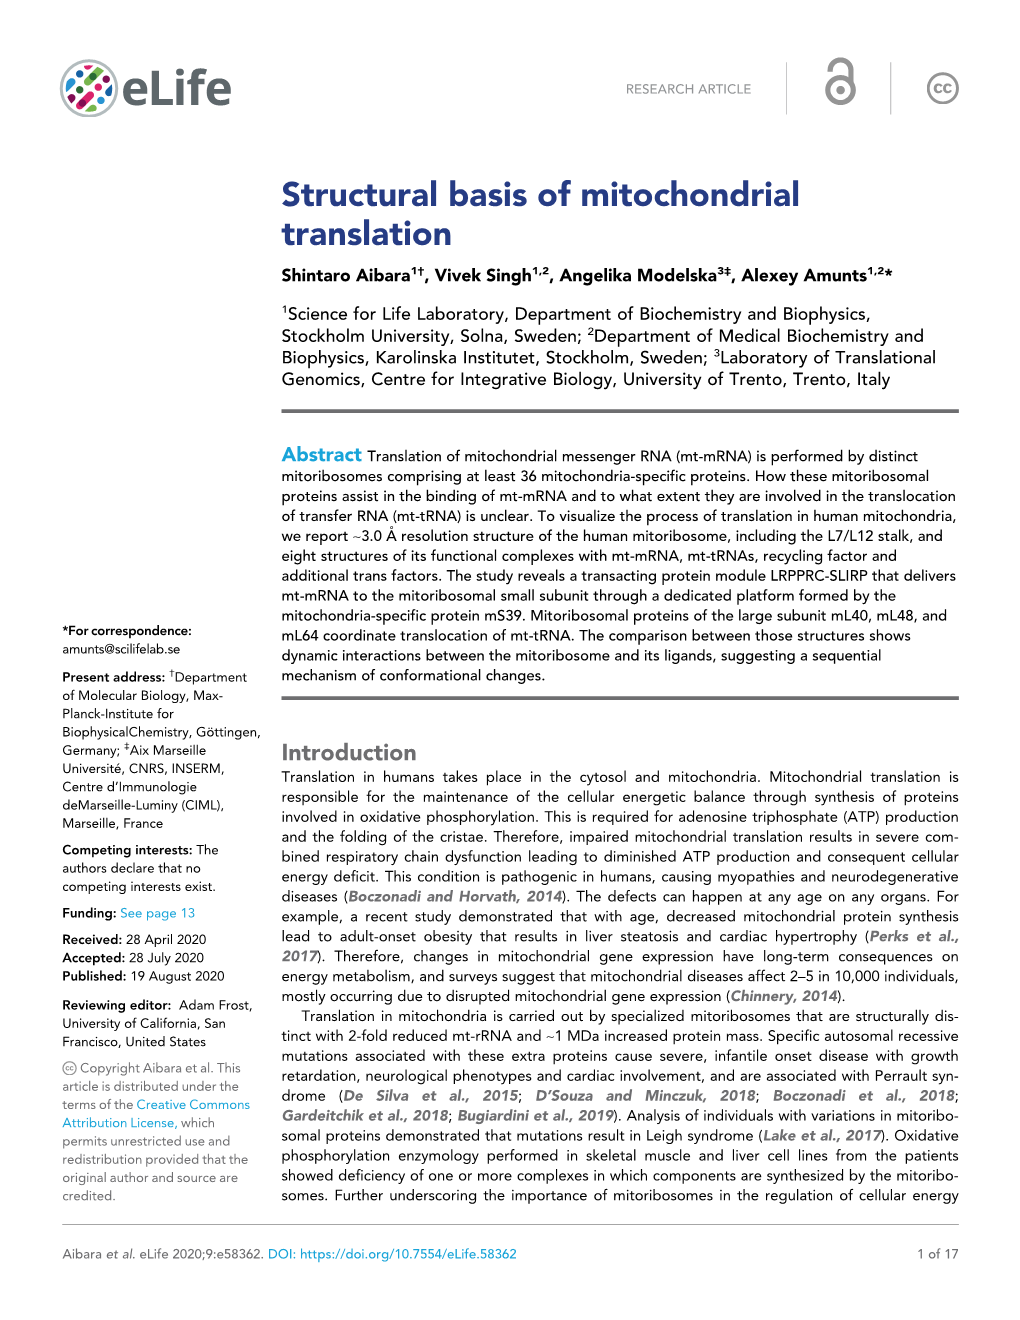 Structural Basis of Mitochondrial Translation Shintaro Aibara1†, Vivek Singh1,2, Angelika Modelska3‡, Alexey Amunts1,2*